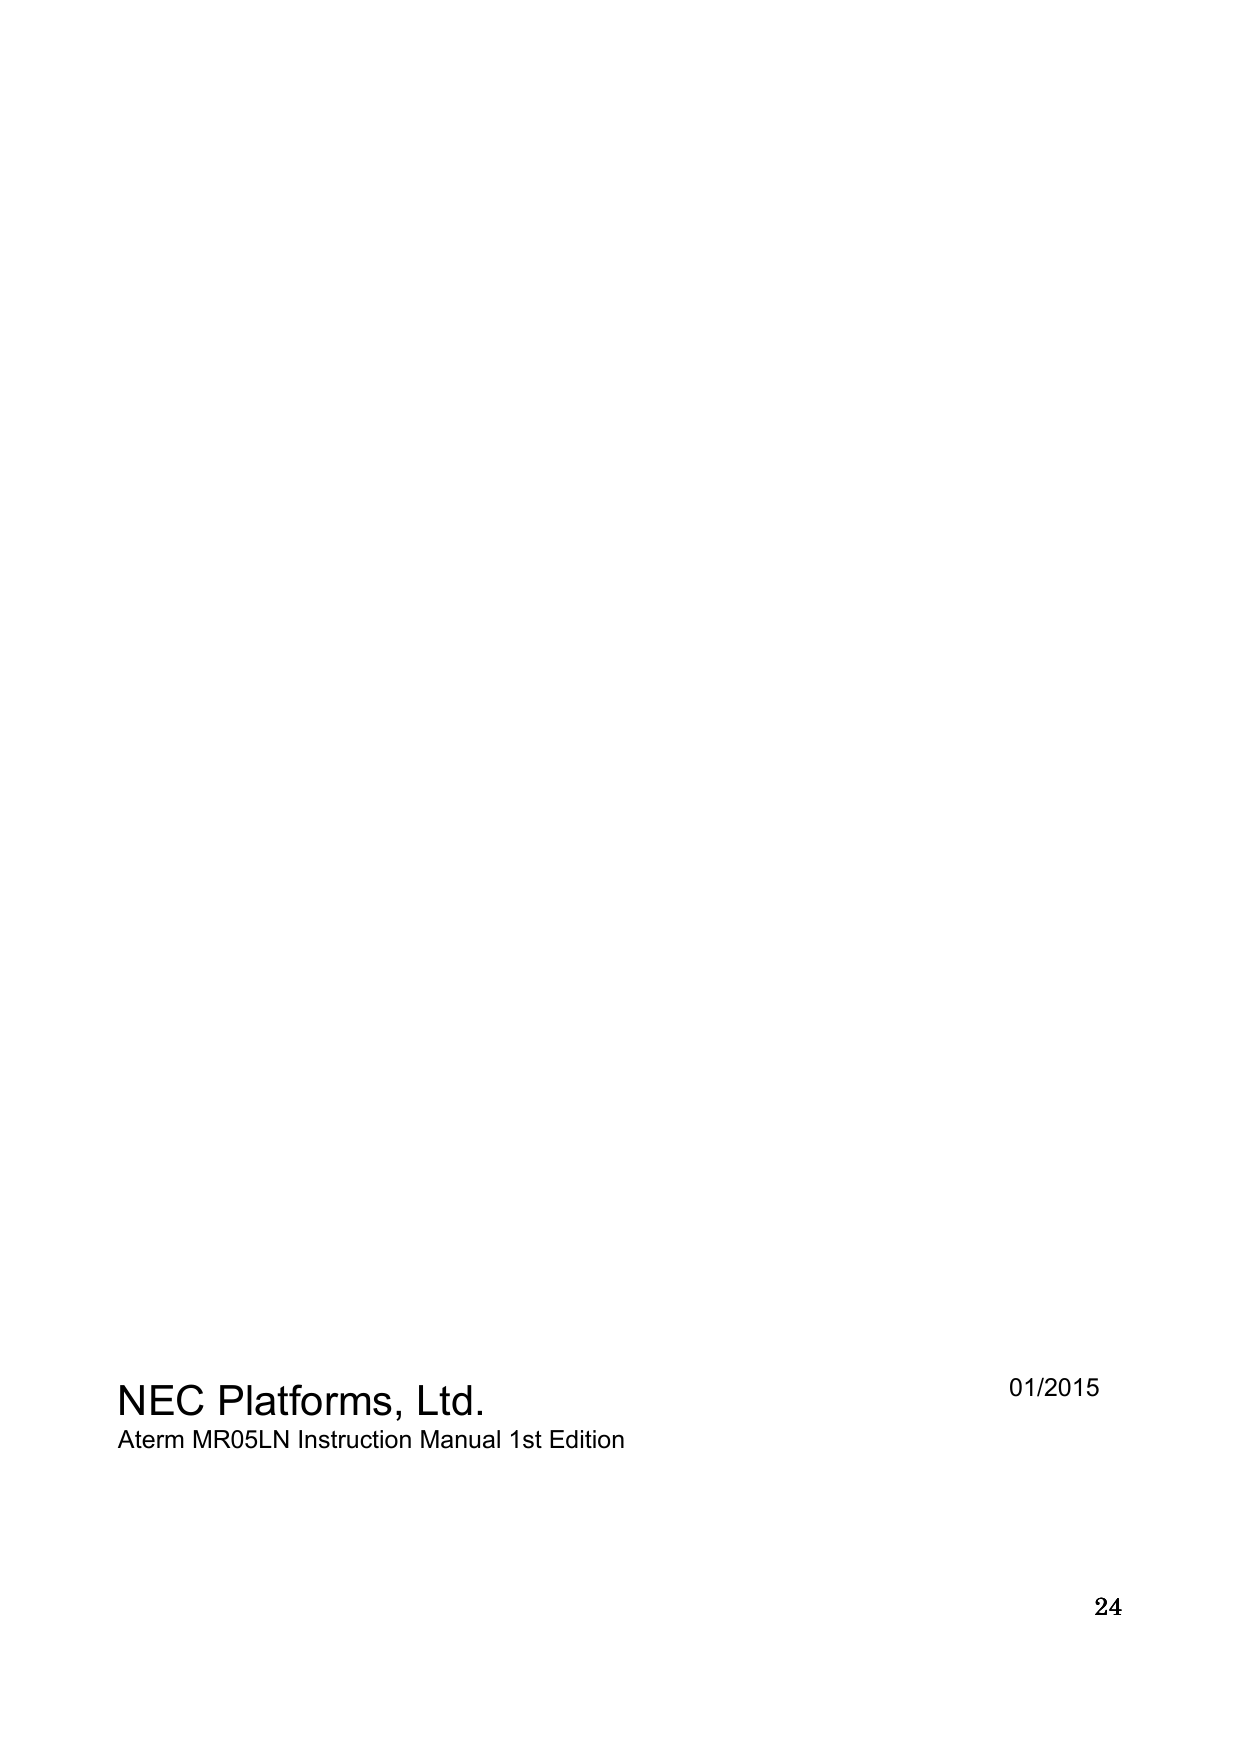 24242424                                              NEC Platforms, Ltd. Aterm MR05LN Instruction Manual 1st Edition      01/2015    